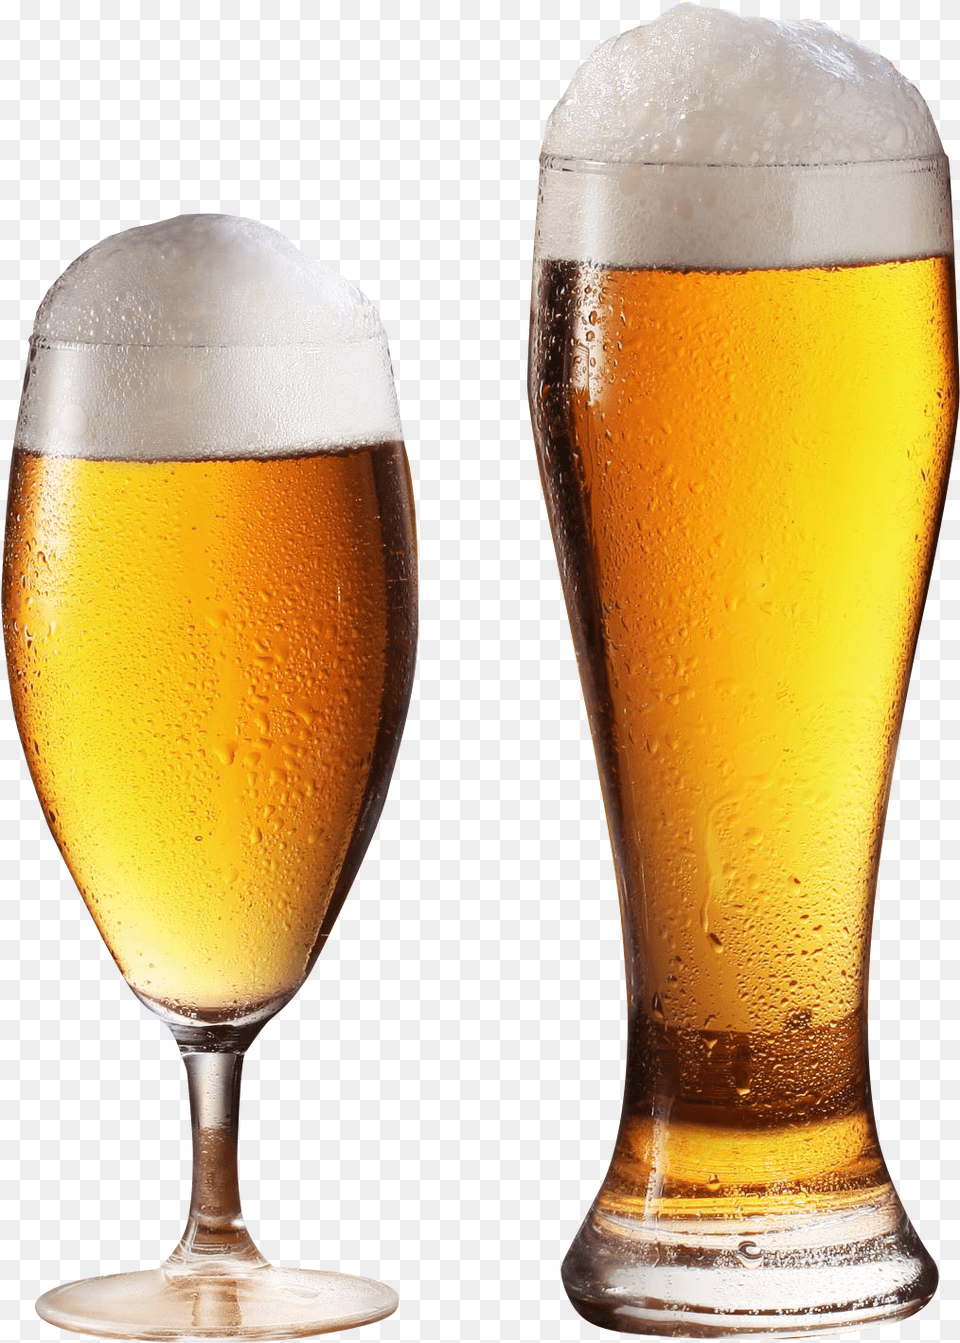 Beer Glass Image Beer Glass Transparent, Alcohol, Beer Glass, Beverage, Lager Png